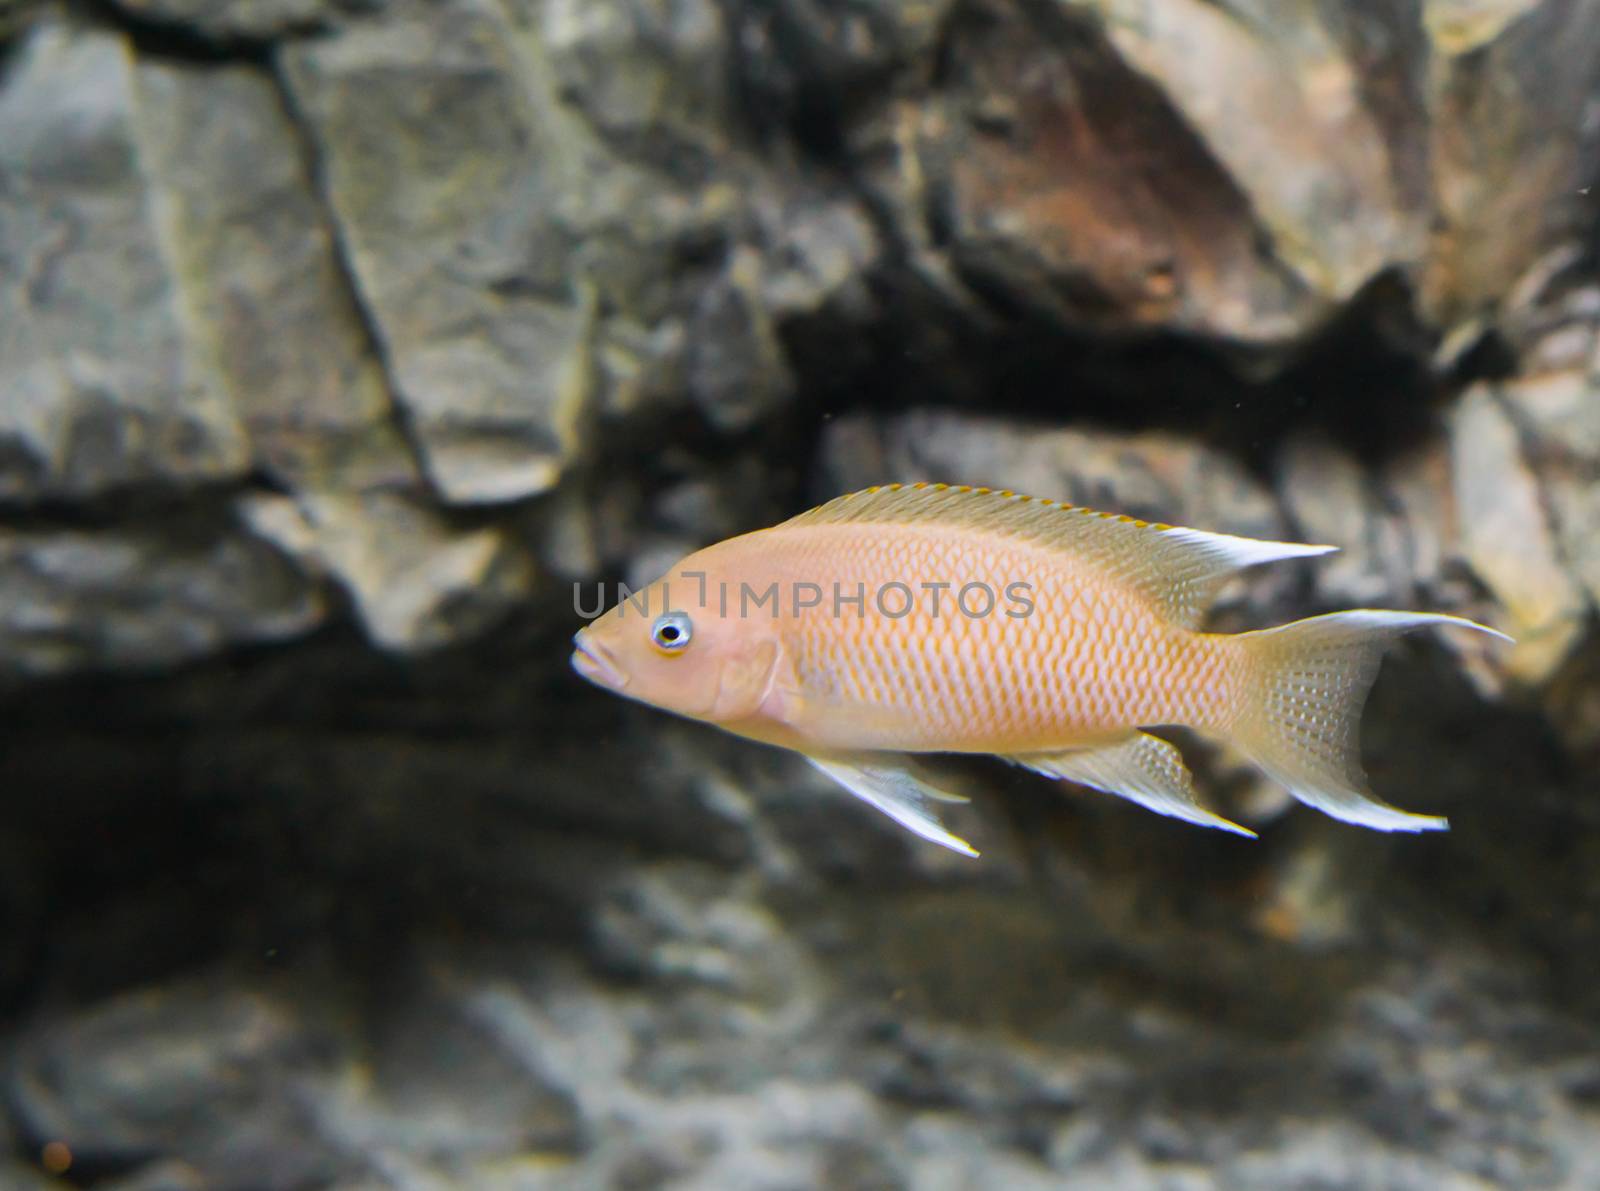 pink malawi cichlid fish in closeup, a popular tropical aquarium pet from lake malawi in Africa